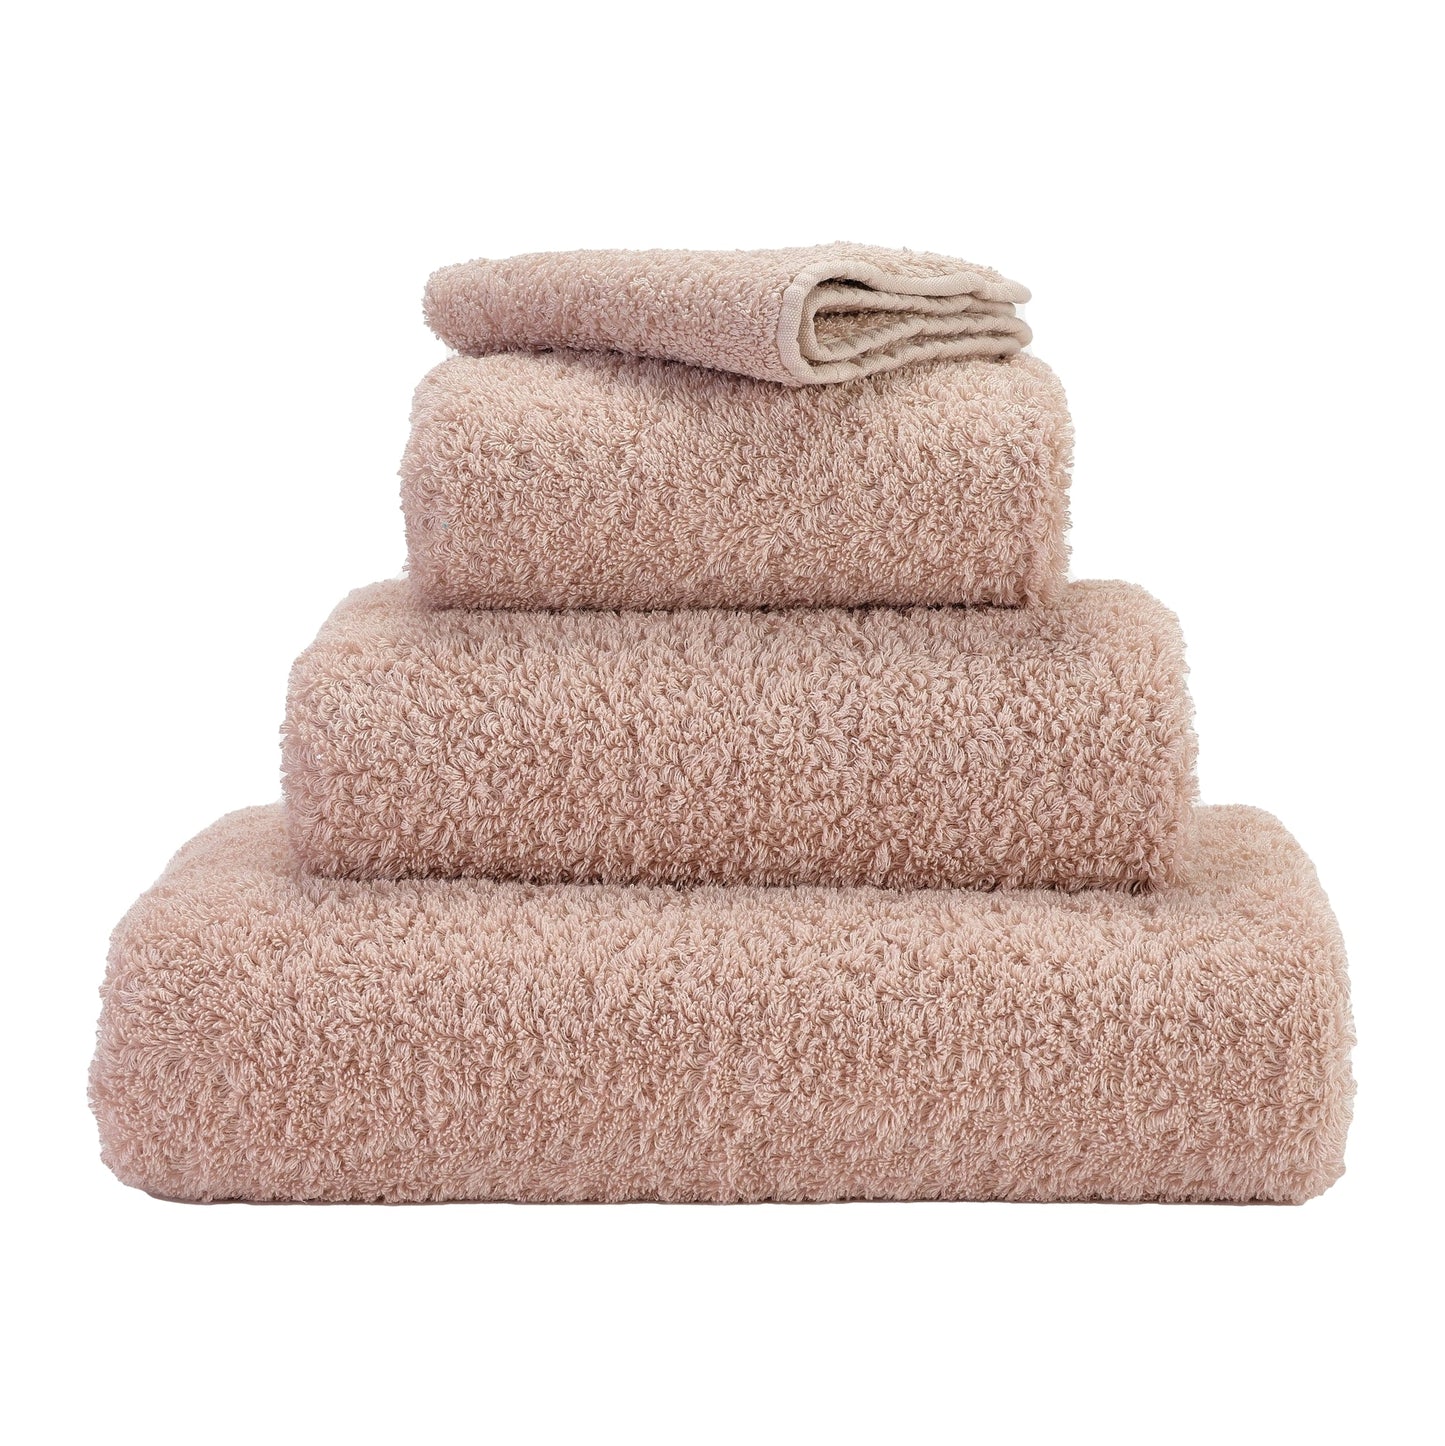 Super Pile Luxury Bath Towels by Abyss & Habidecor | 518 Primrose - |VESIMI Design| Luxury and Rustic bathrooms online